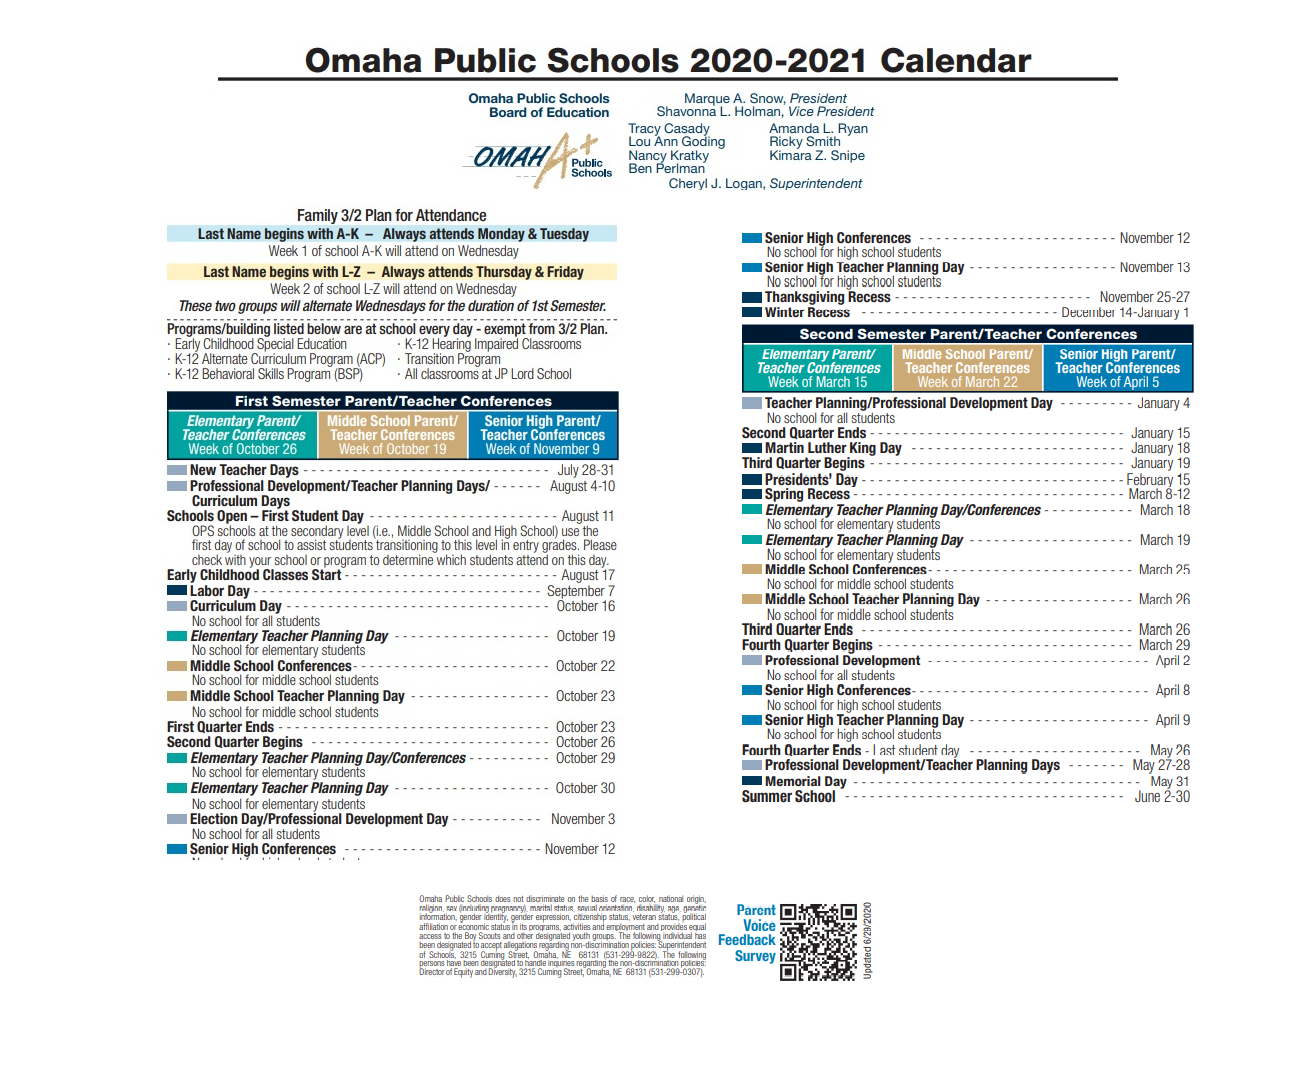 District School Academic Calendar Key for Bancroft Elementary